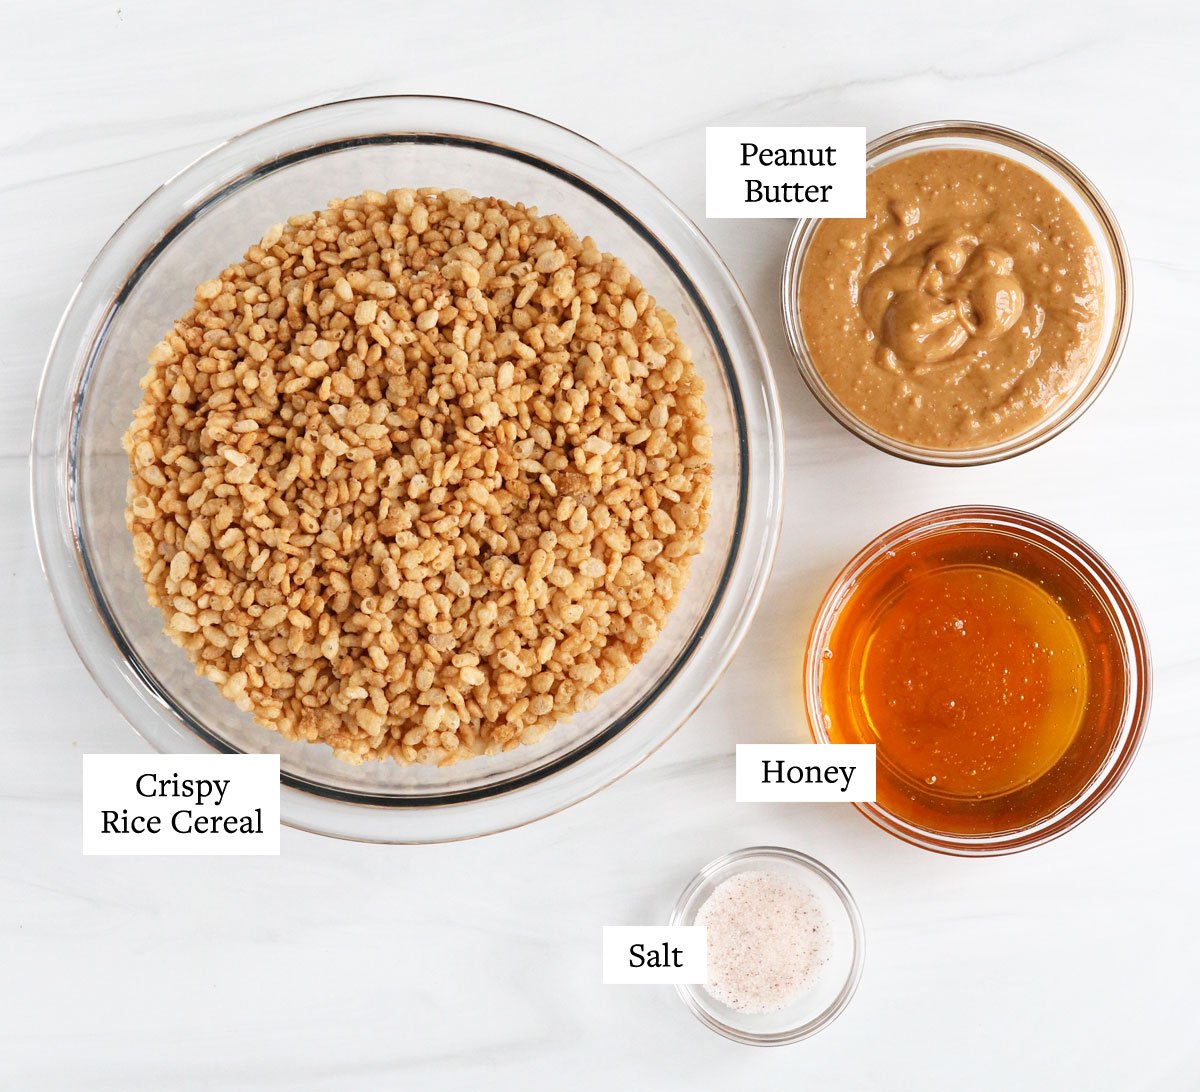 peanut butter rice crispy treat ingredients in glass bowls.